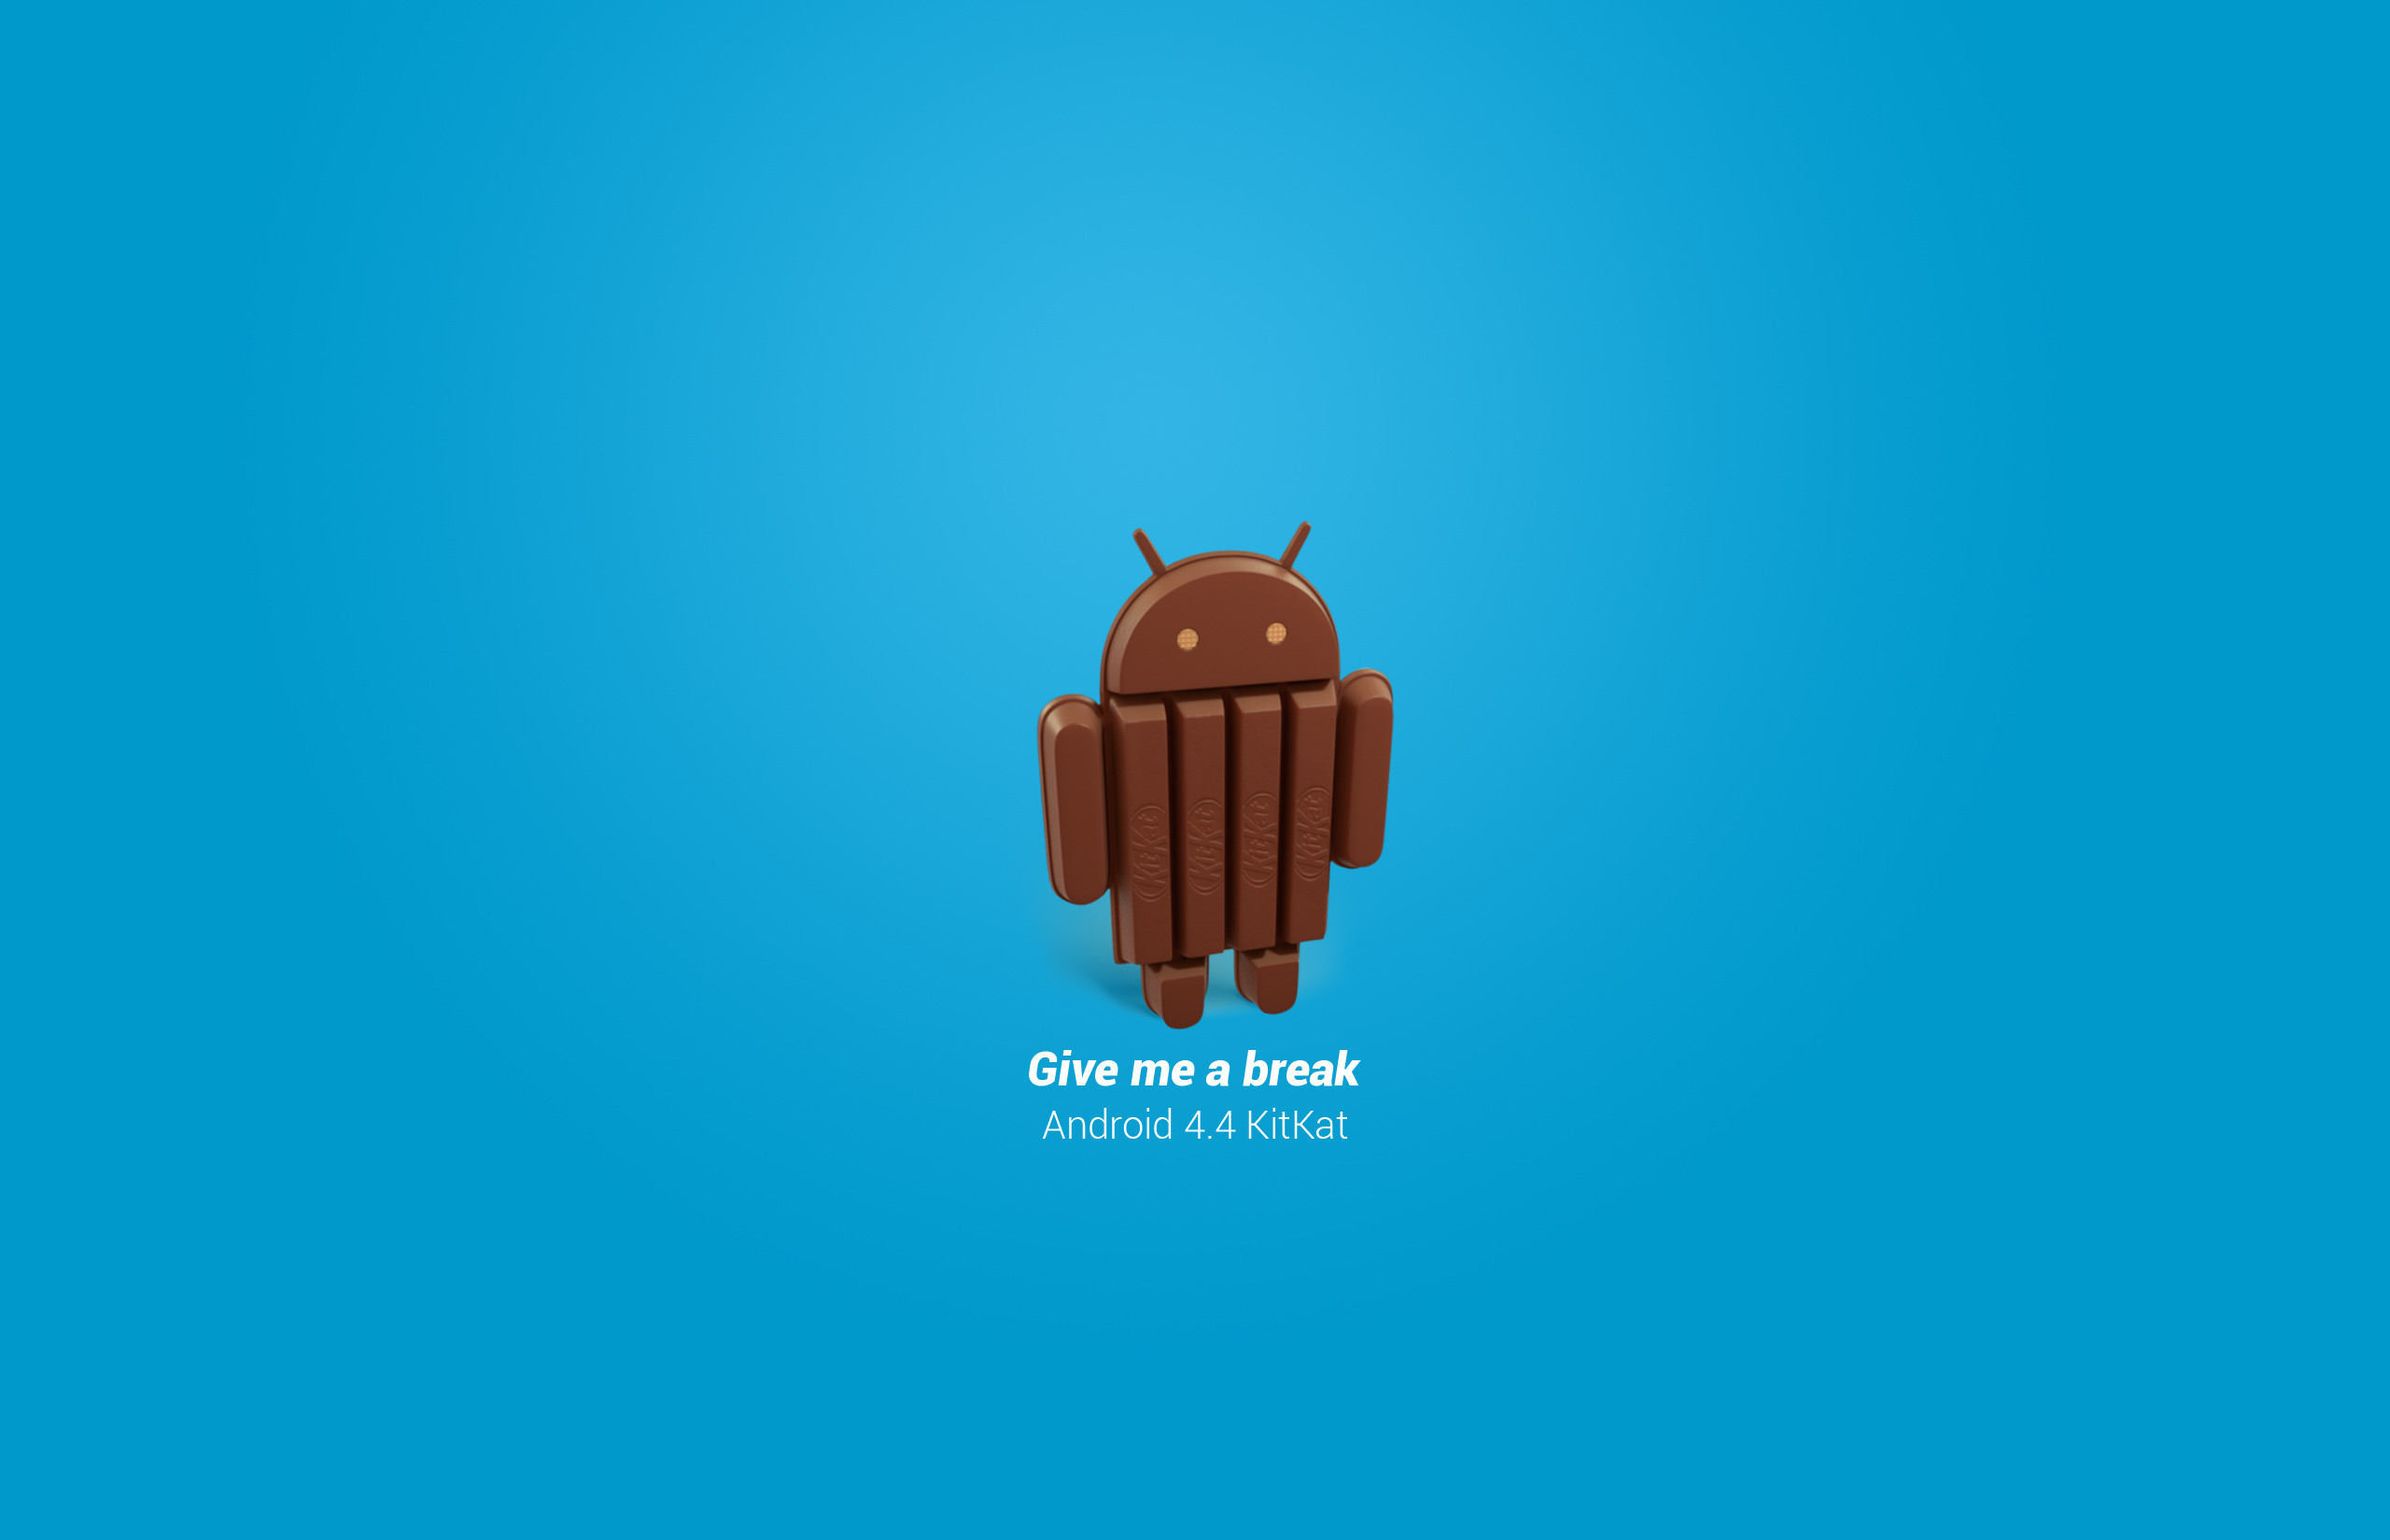 Android Logo Wallpapers Hd Pixelstalk Net